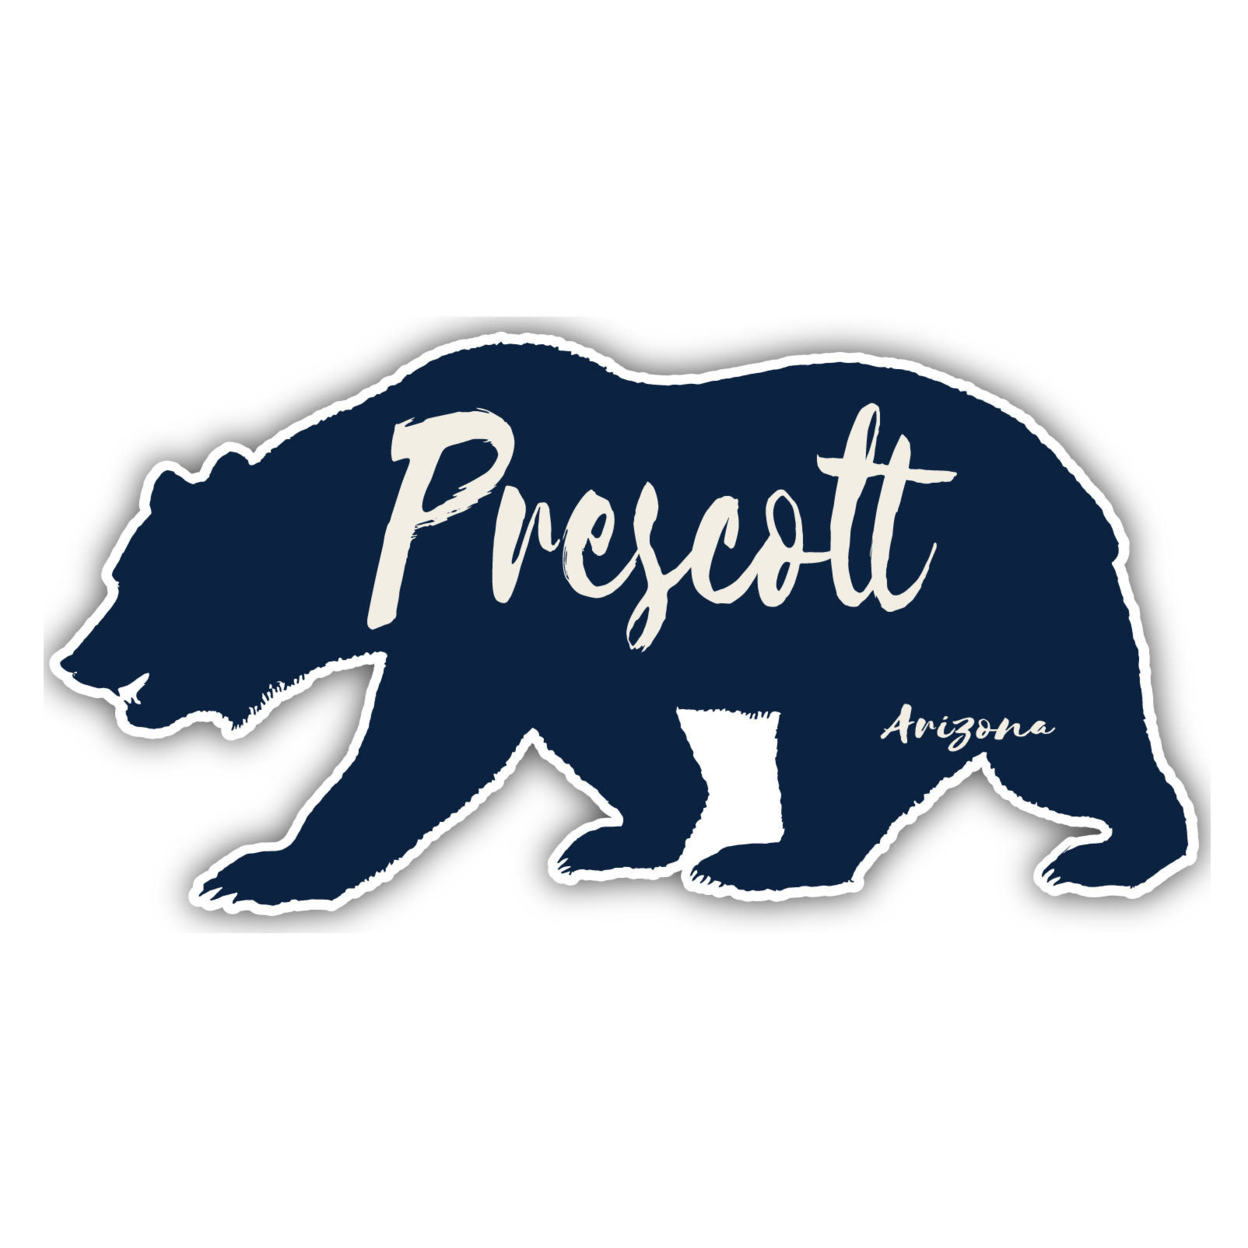 Prescott Arizona Souvenir Decorative Stickers (Choose Theme And Size) - Single Unit, 2-Inch, Bear